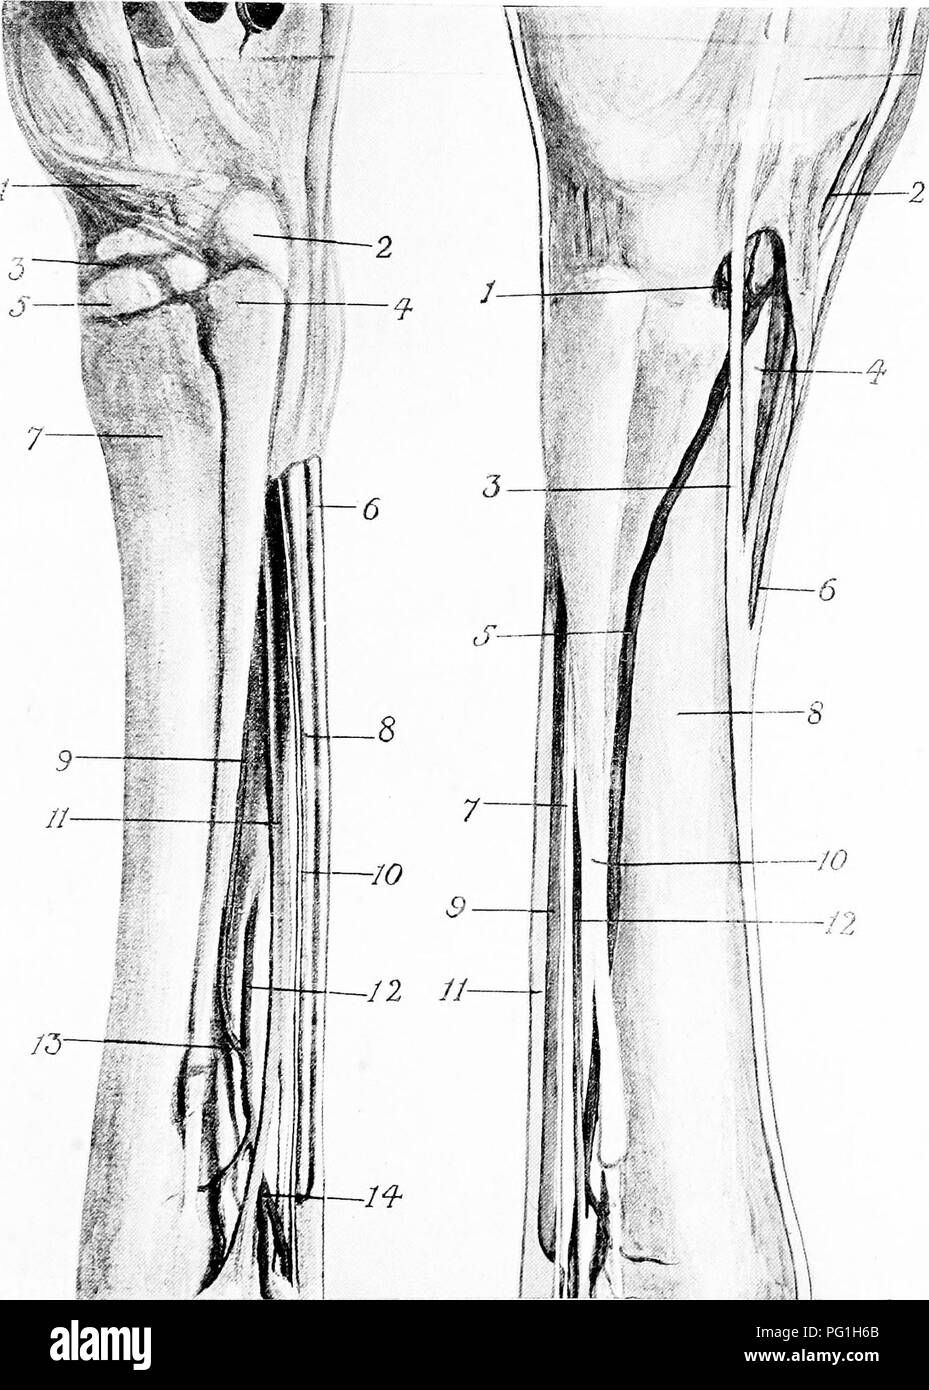 . The surgical anatomy of the horse ... Horses. Plate XXVIII.—Metatarsal Region, showing Arteries, Tendons, Ligaments, Bones, etc. A.—INNER aspect I. Cunean tendon. 2. Cuneiform parvum. 3. Scaphoid. 4. Head of inner small metatarsal bone. 5. Cuneiform magnum. 6. Perforatus tendon. 7. Large metatarsal bone. 8. Perforans tendon. 9. Internal plantar interosseous artery. 10. Internal plantar nerve. 11. Suspensory ligament. 12. Large metatarsal artery. 13. Anastomosis of large metatarsal and internal plantar interosseous arteries. 14. Division of large metatarsal into the two digital arteries. B.—O Stock Photo